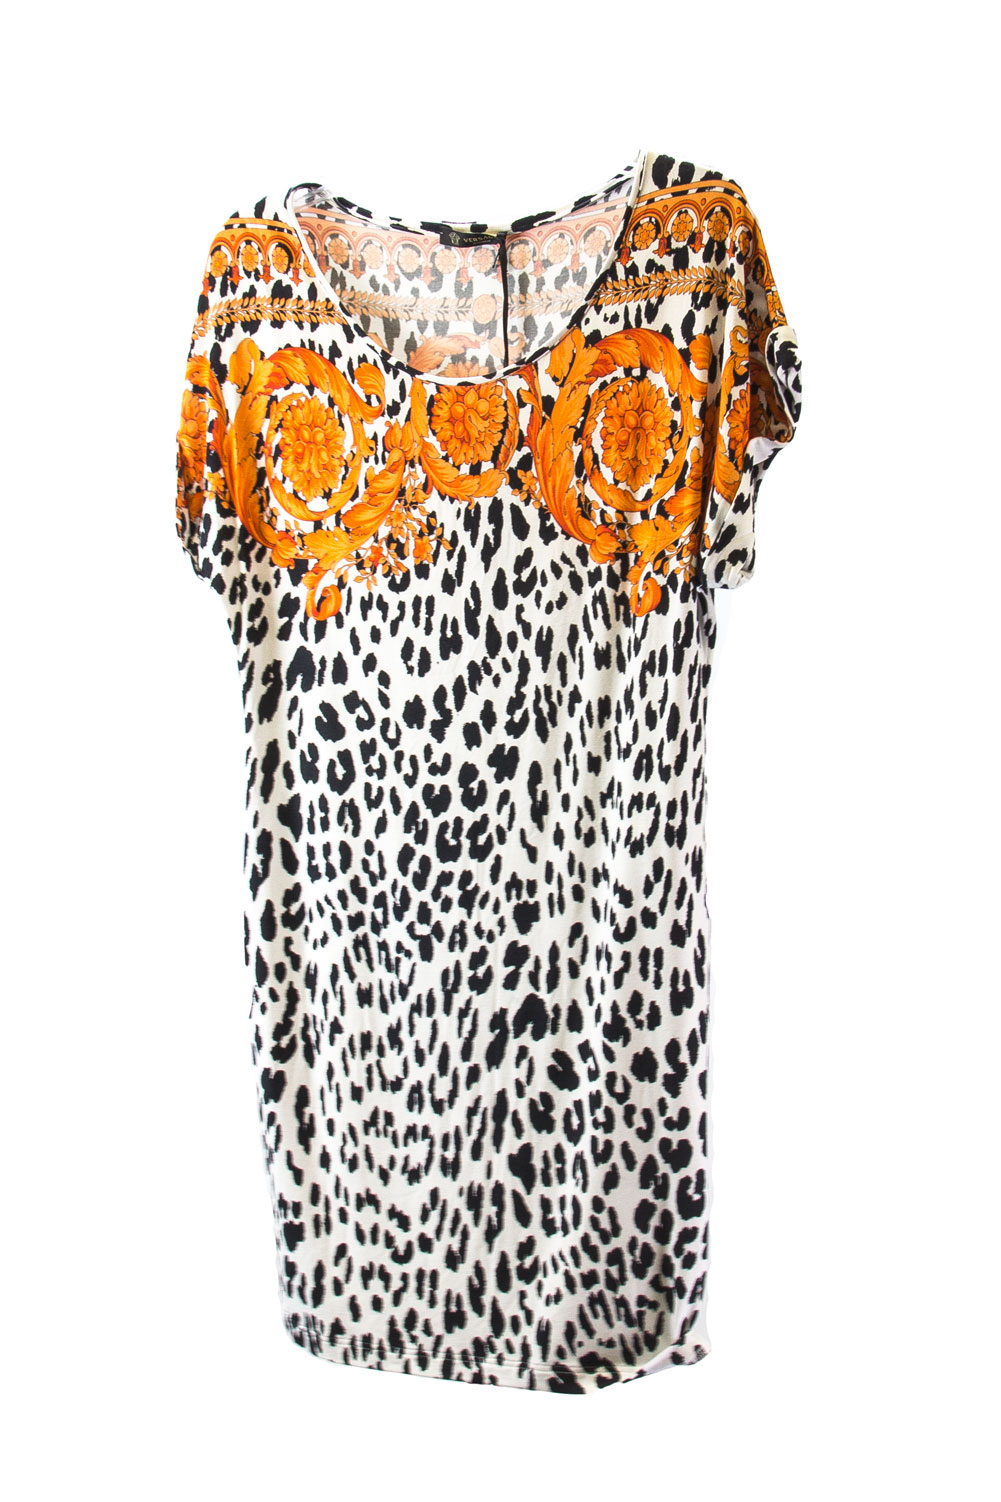 Versace Beachwear Women's Barocco Animalier Cover-up Dress IT 42 Orange/Black/White